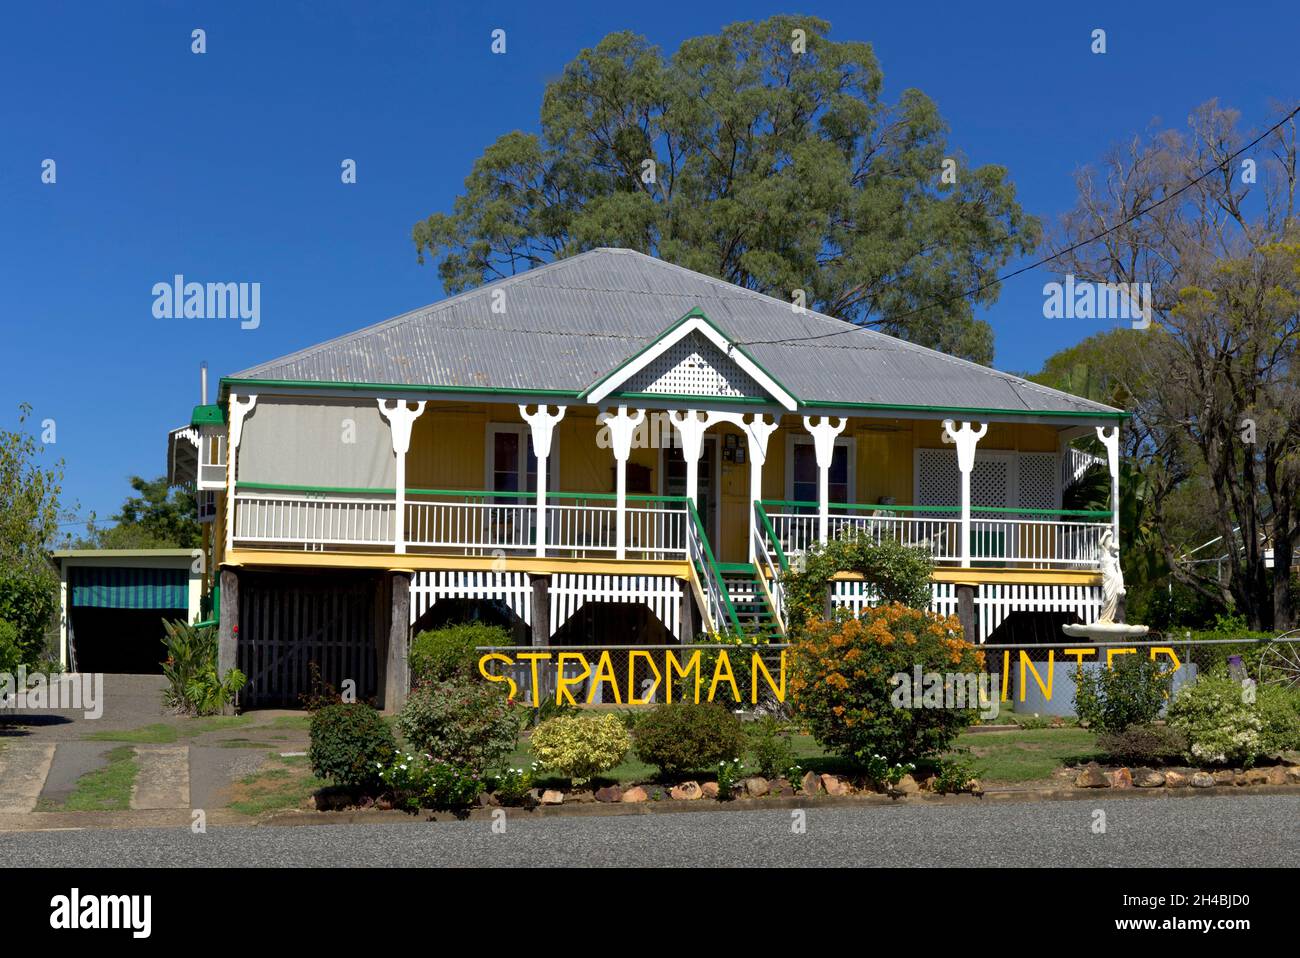 Queenslander style architectural style house in Biggenden Queensland Australia Stock Photo